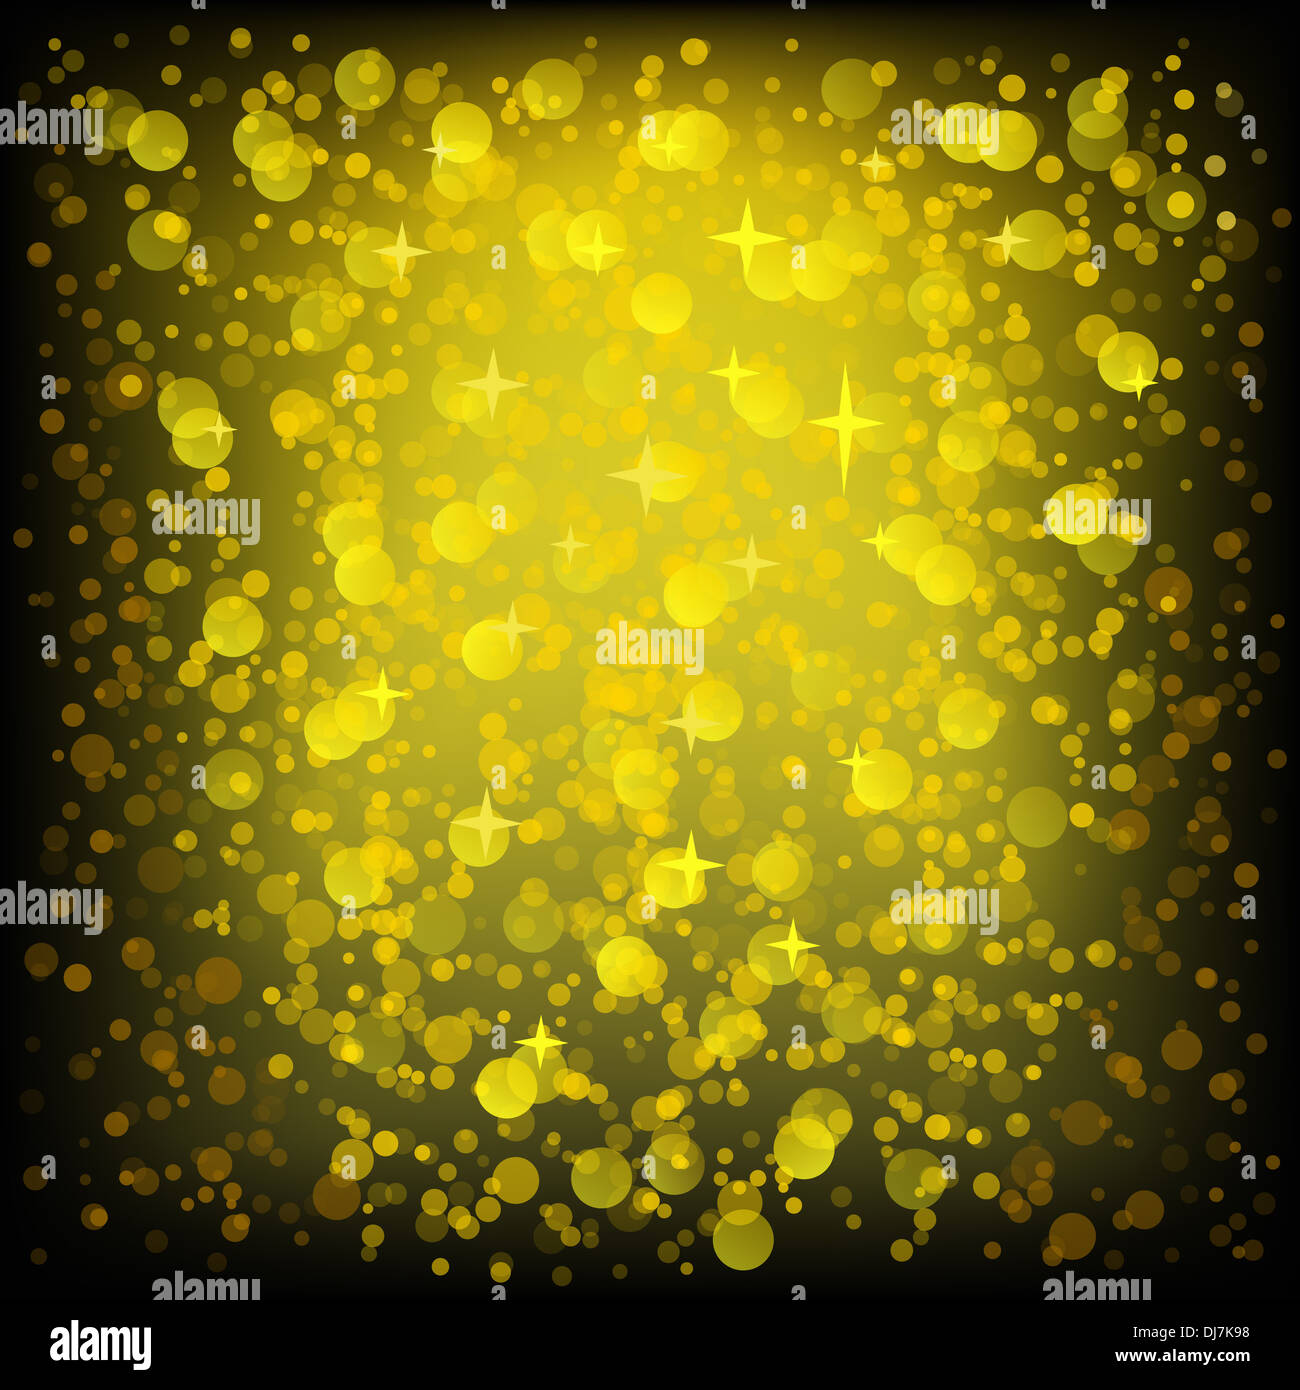 Golden Glittering Background Stock Photo